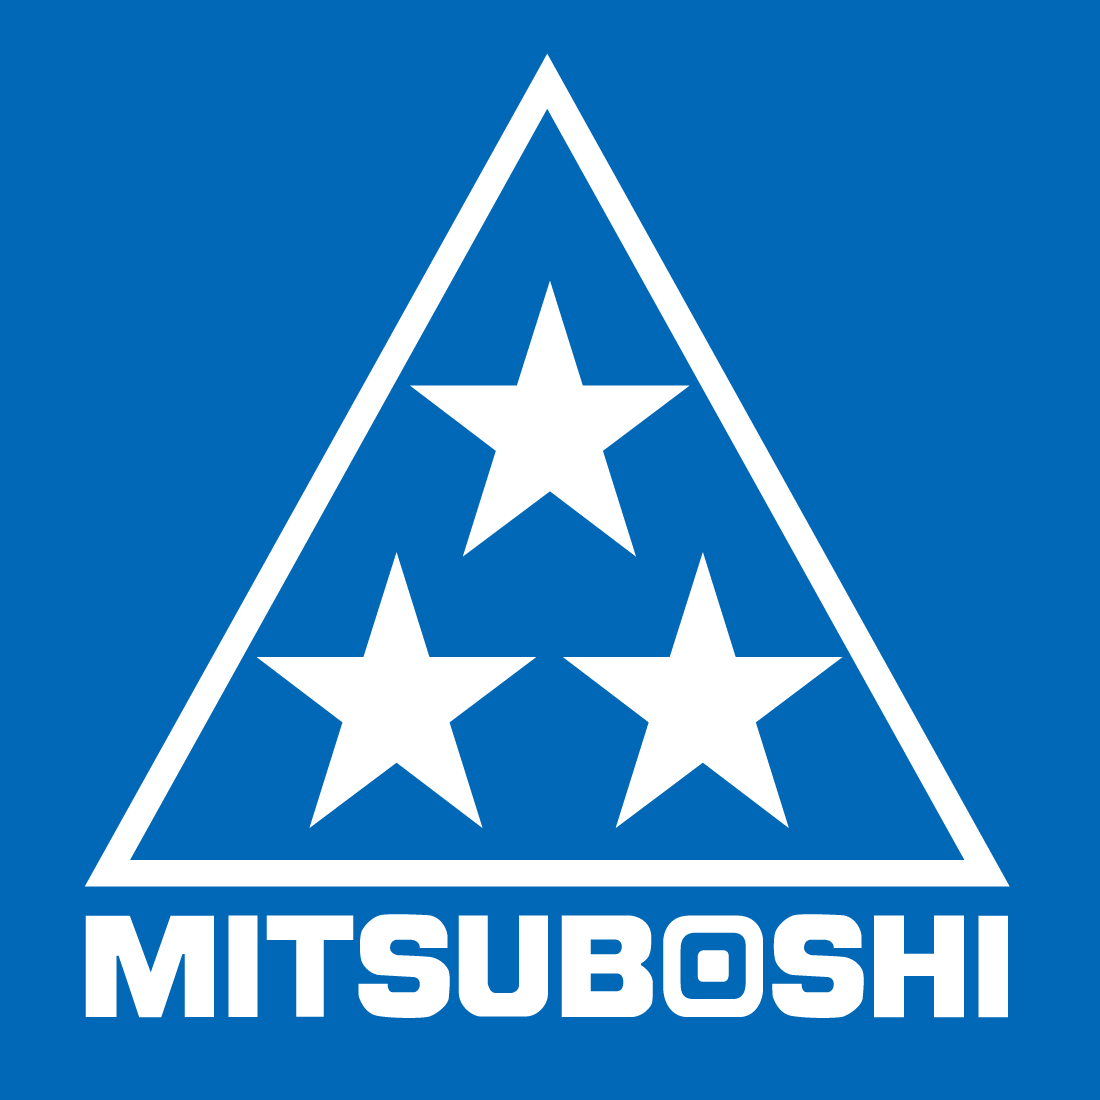 Mitsuboshi logo